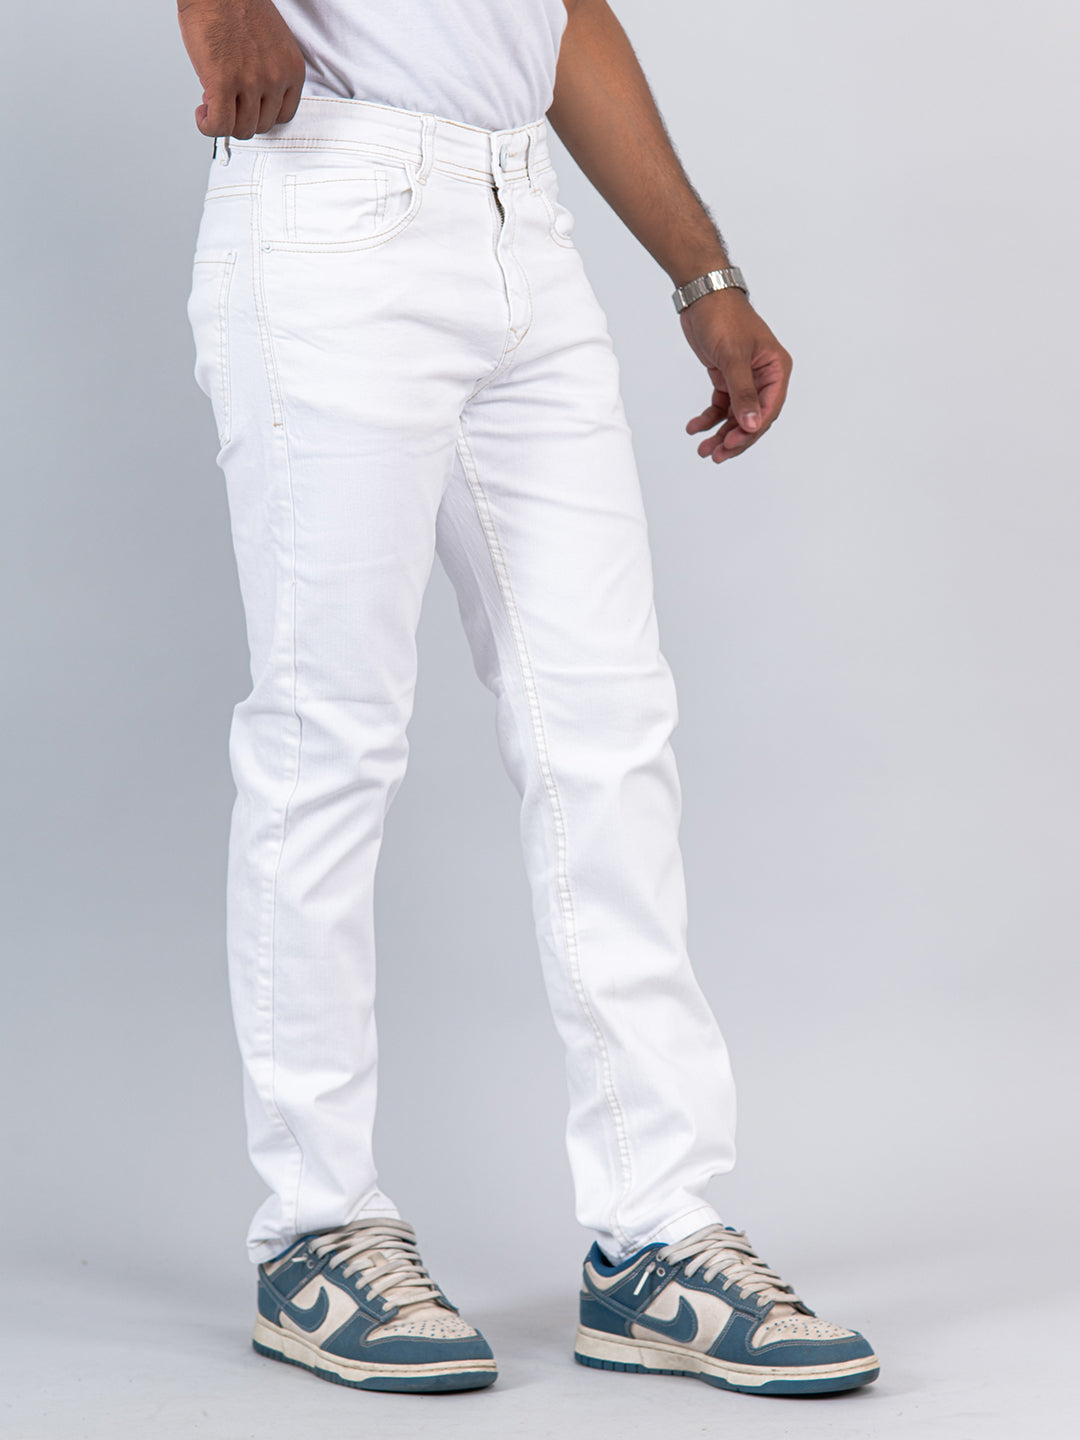 Kids High Rise Vintage Slim Jeans | Boys white jeans, White jeans men, Slim  jeans